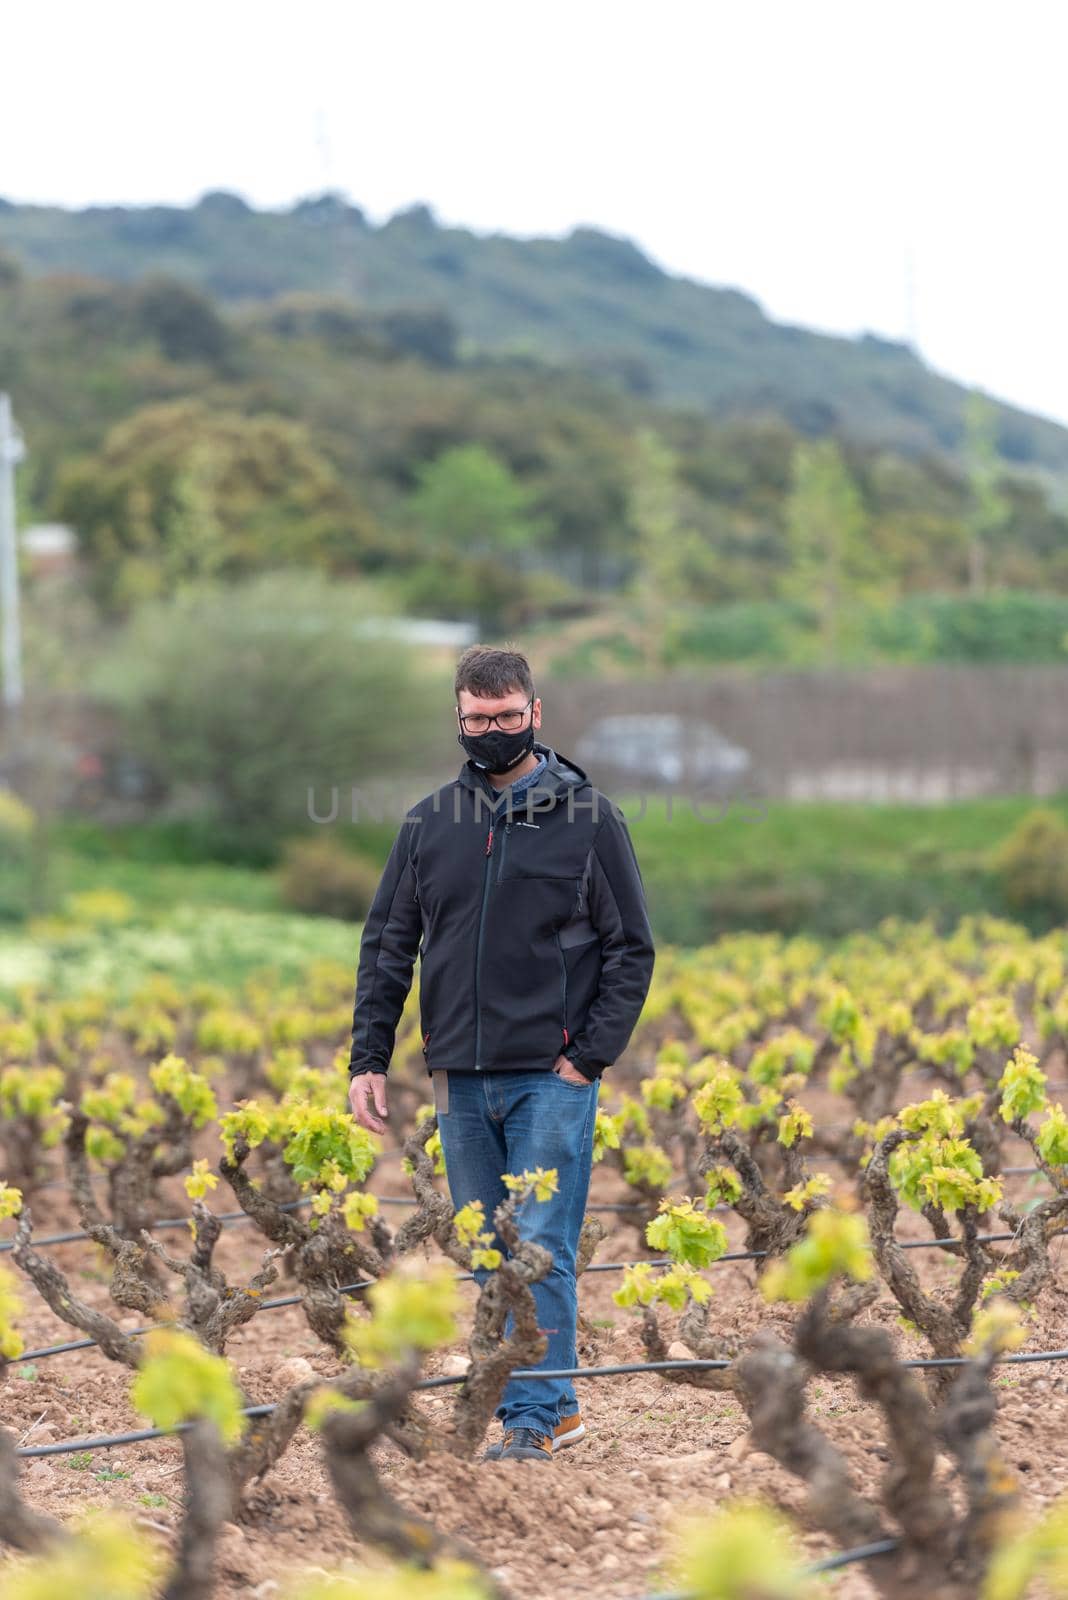 Vineyards in the La Rioja region of Spain in 2021 by martinscphoto